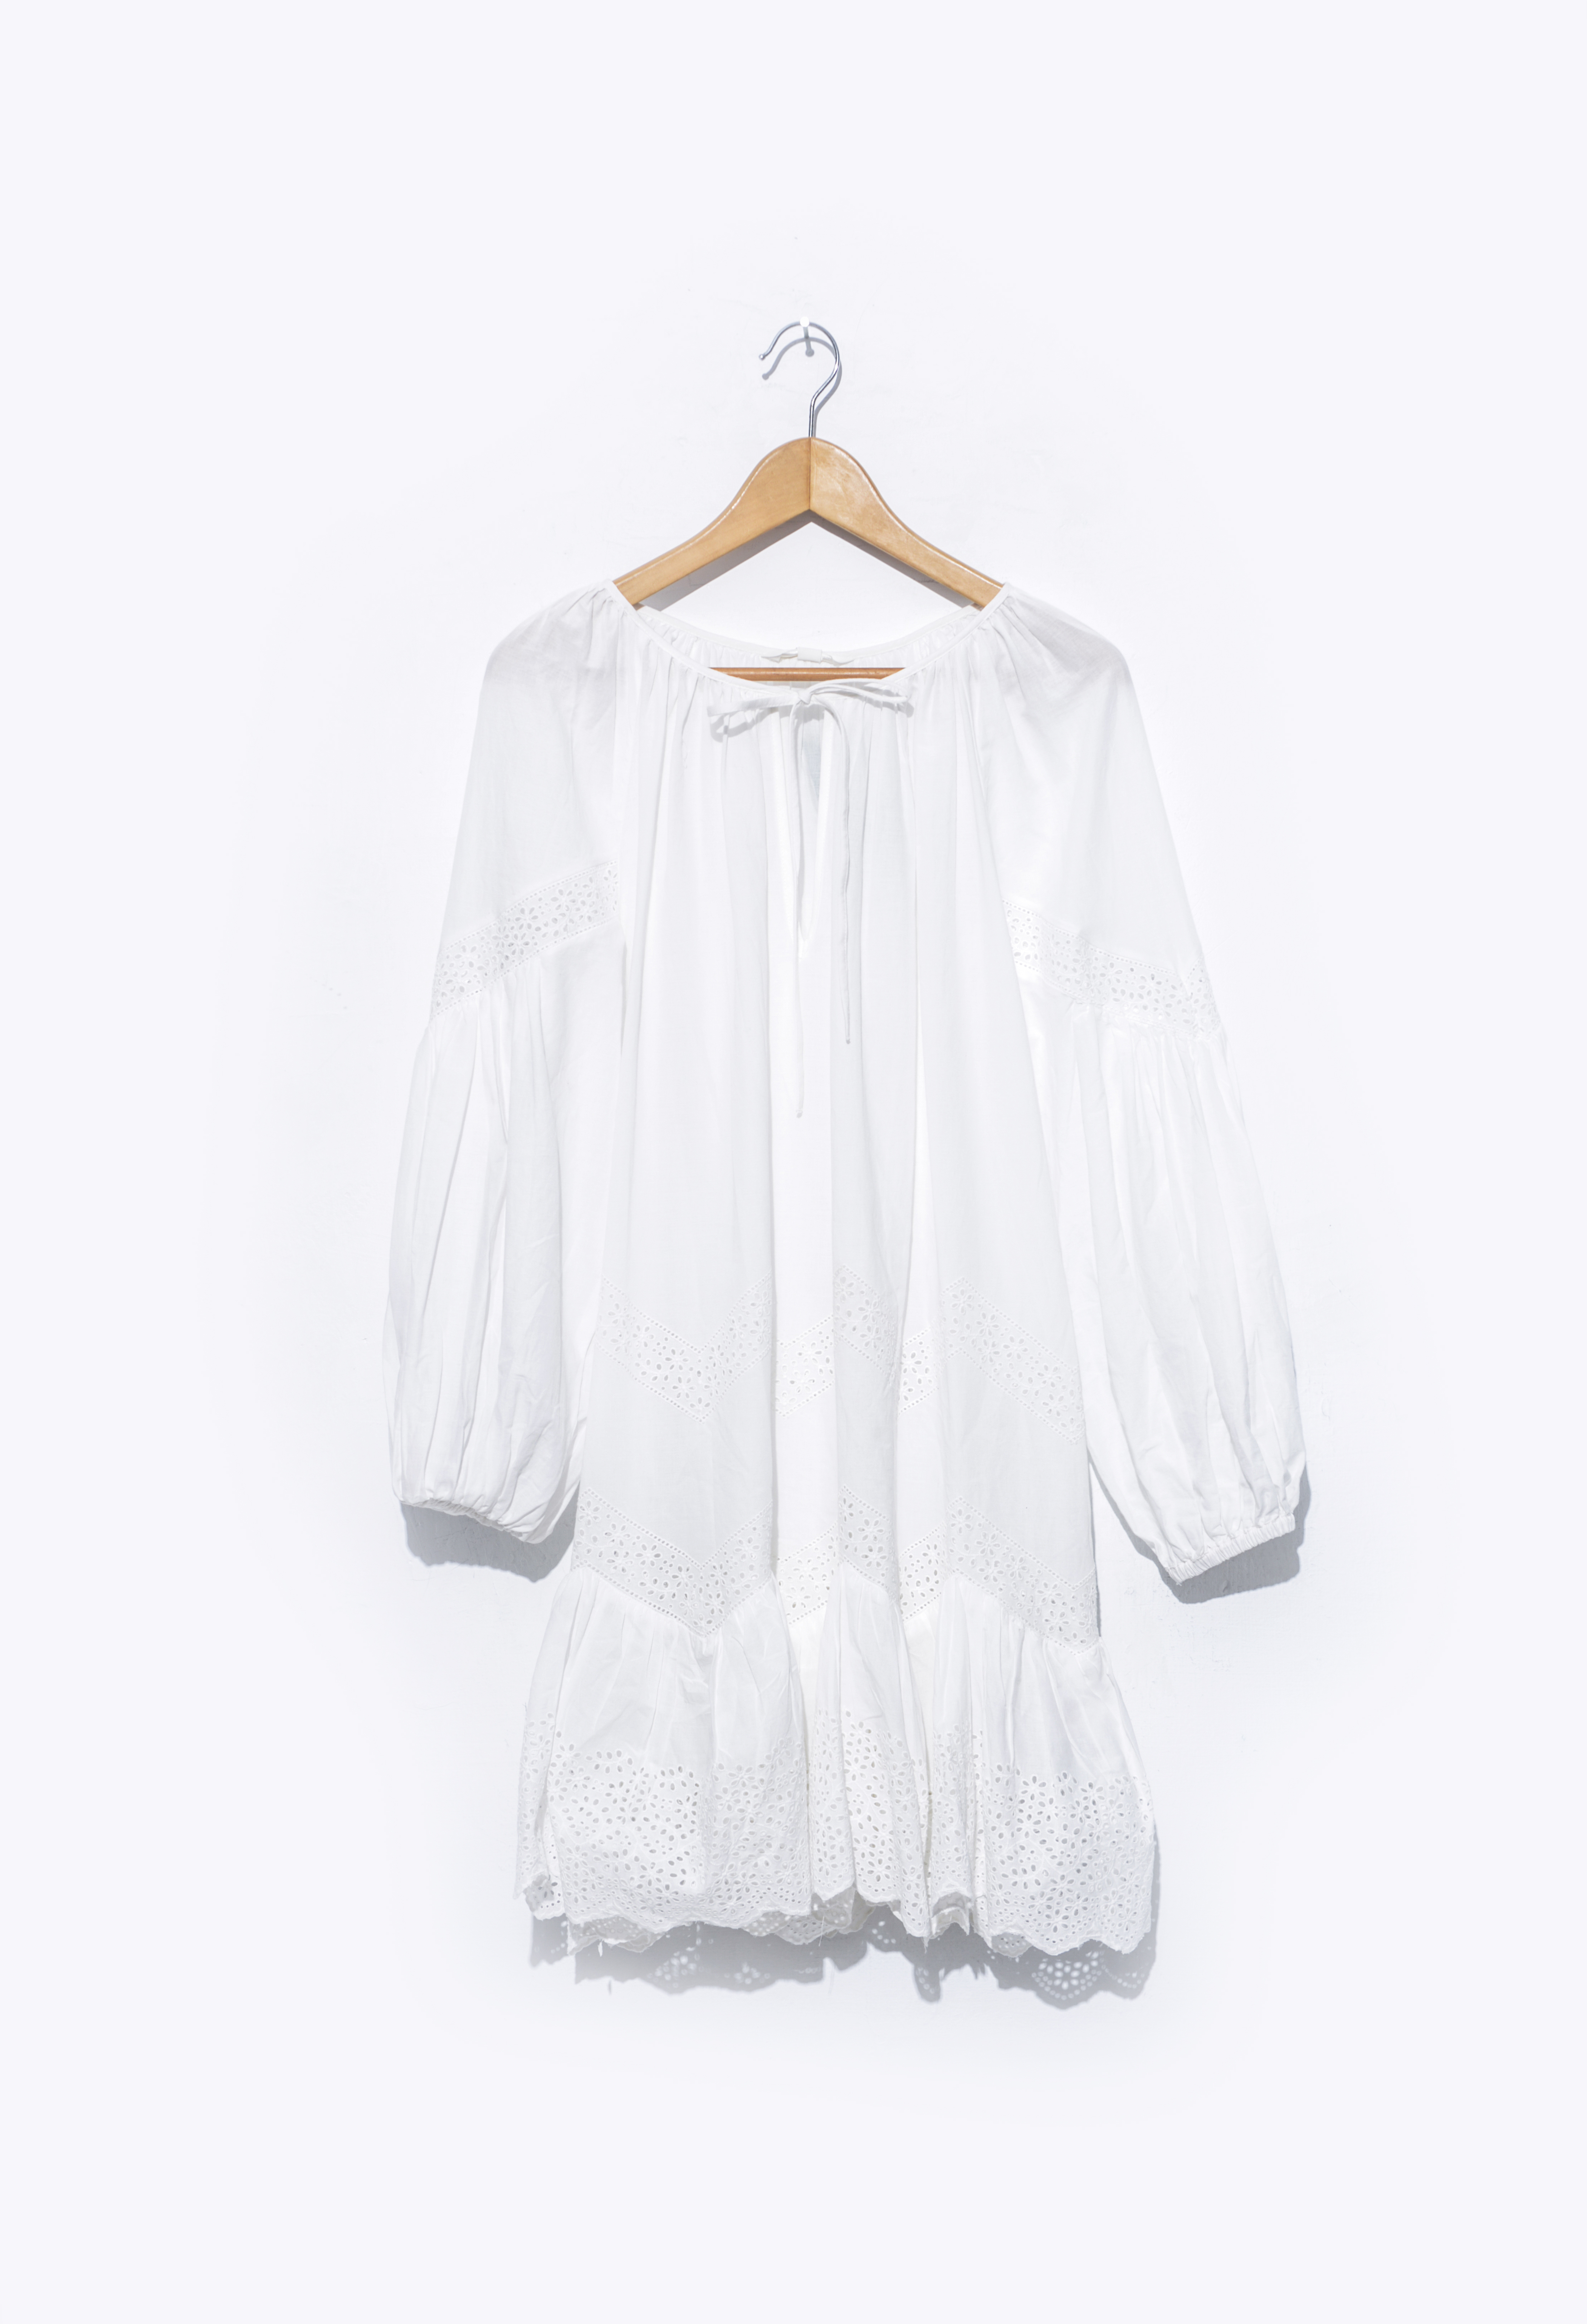 Une robe blanche sur un cintre | Source : Shutterstock